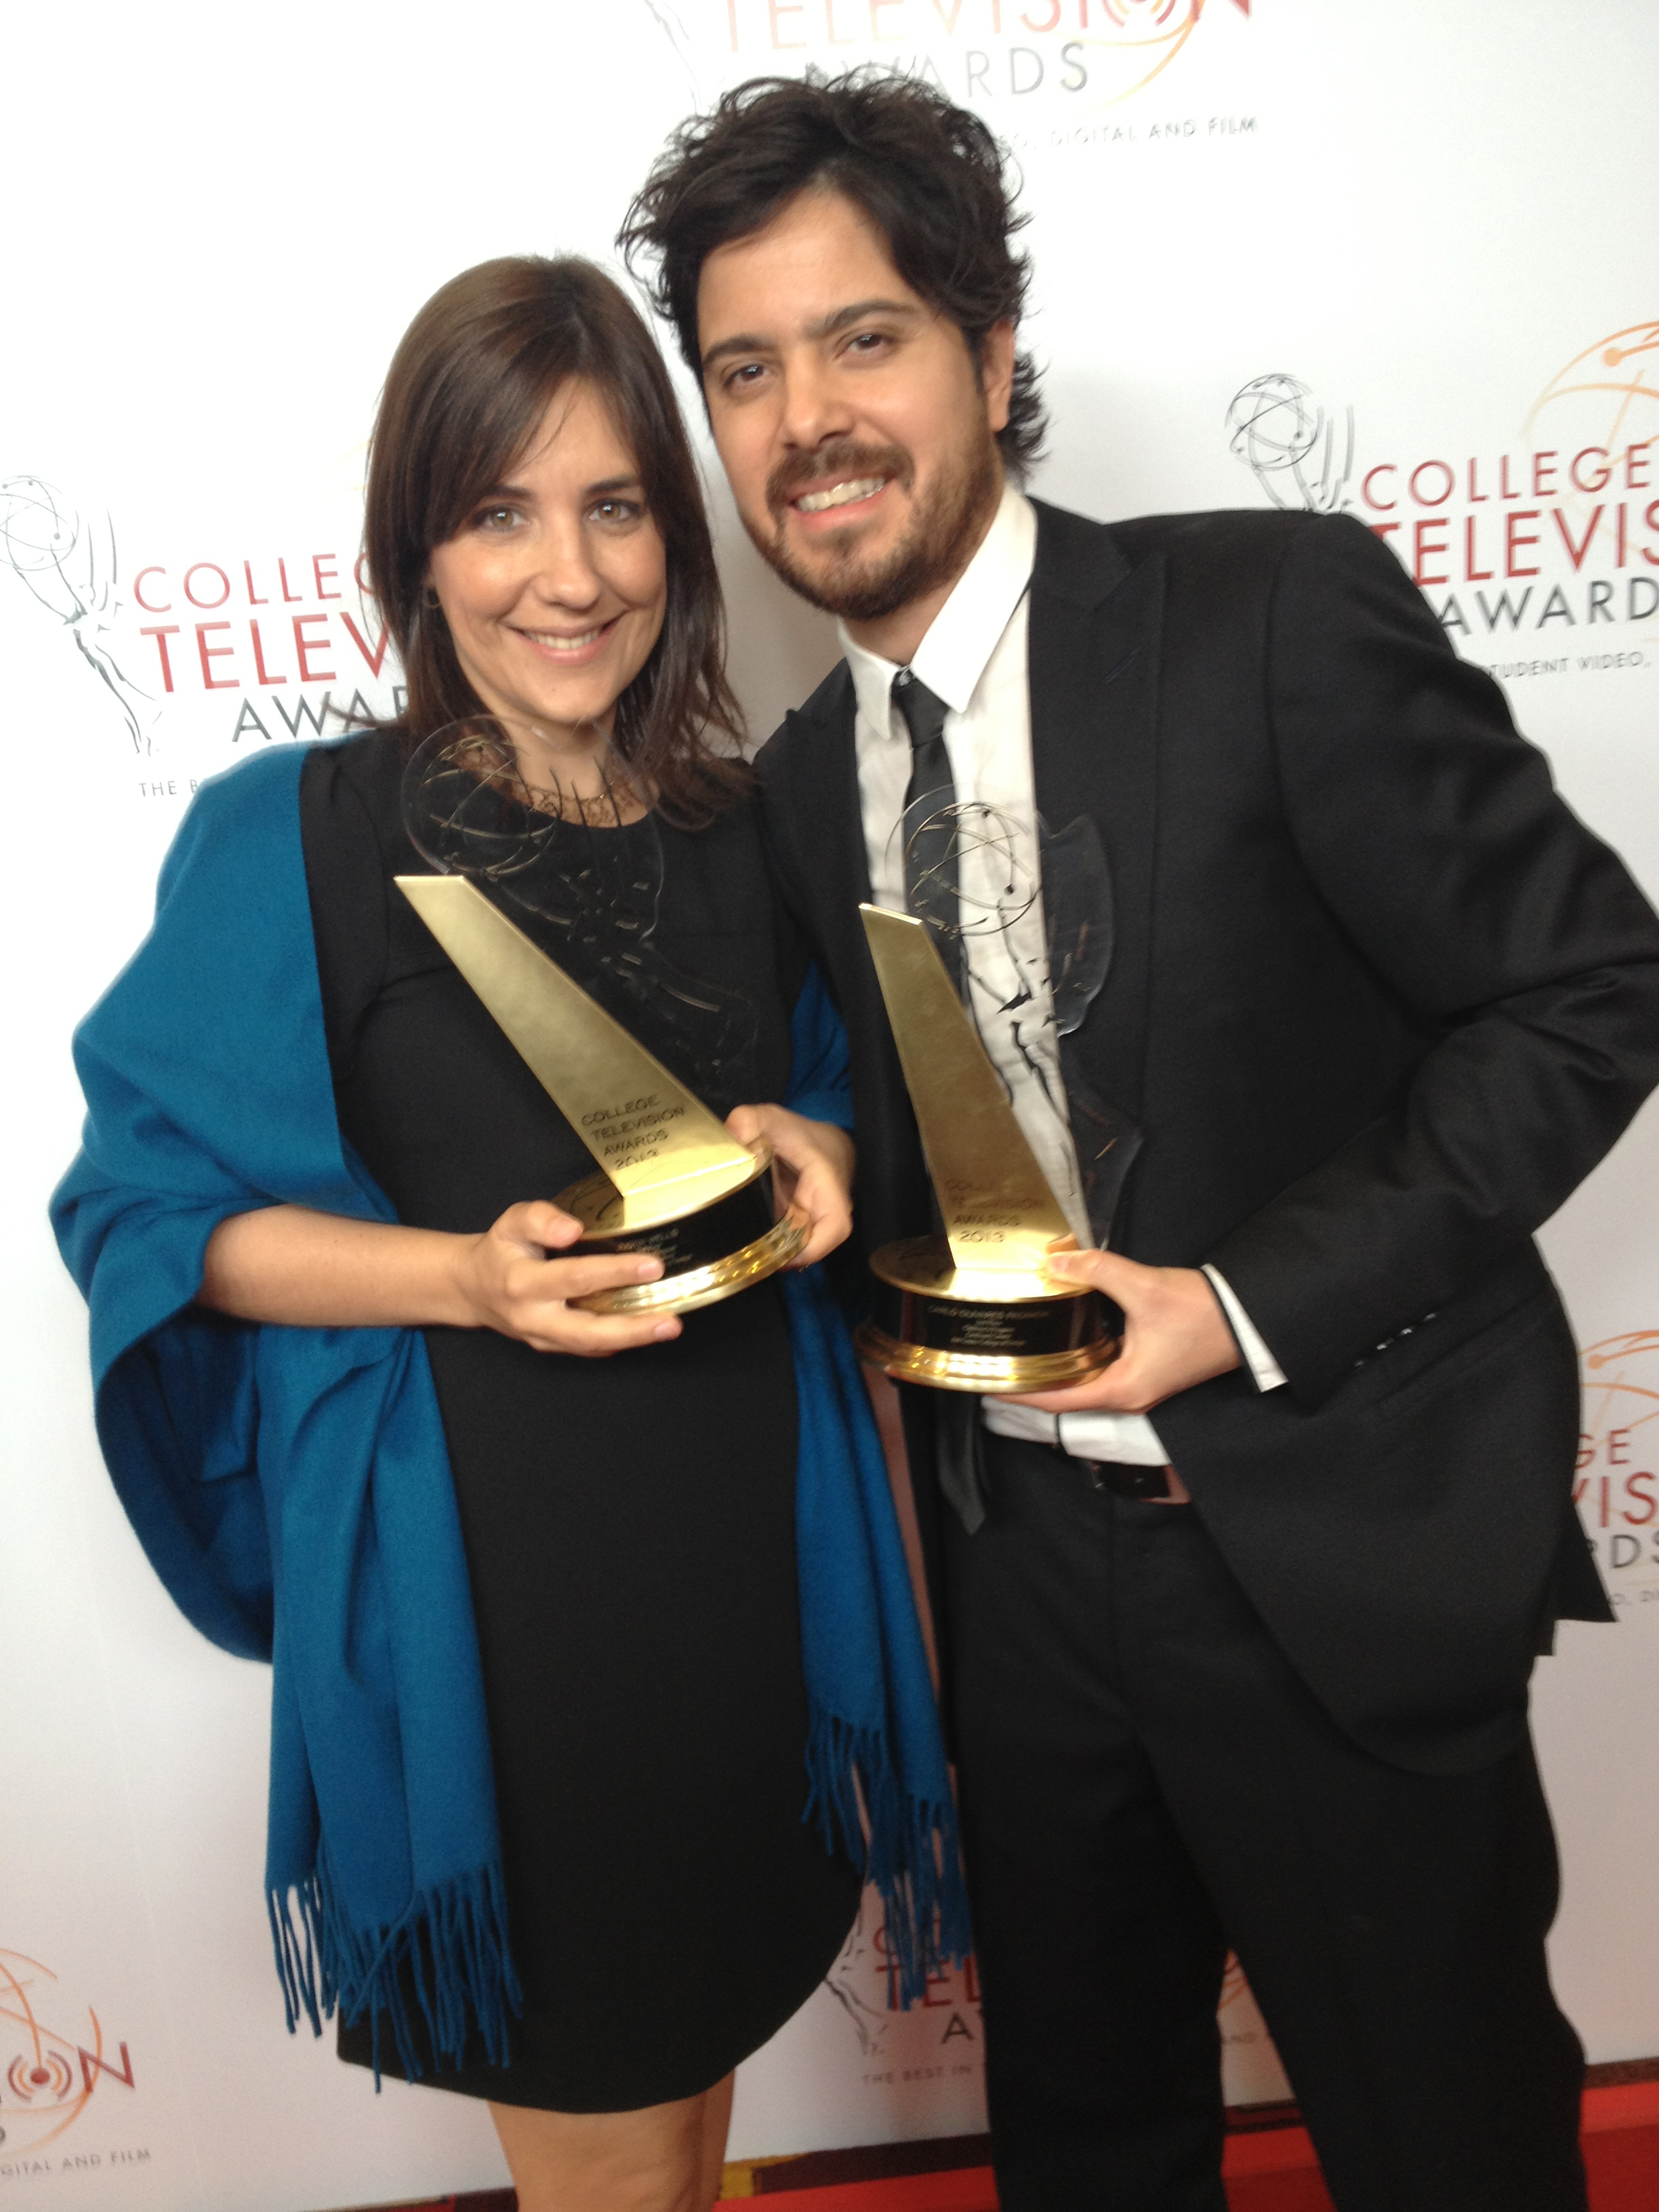 Cacá Santoro and Carlo Olivares Paganoni at College Television Awards